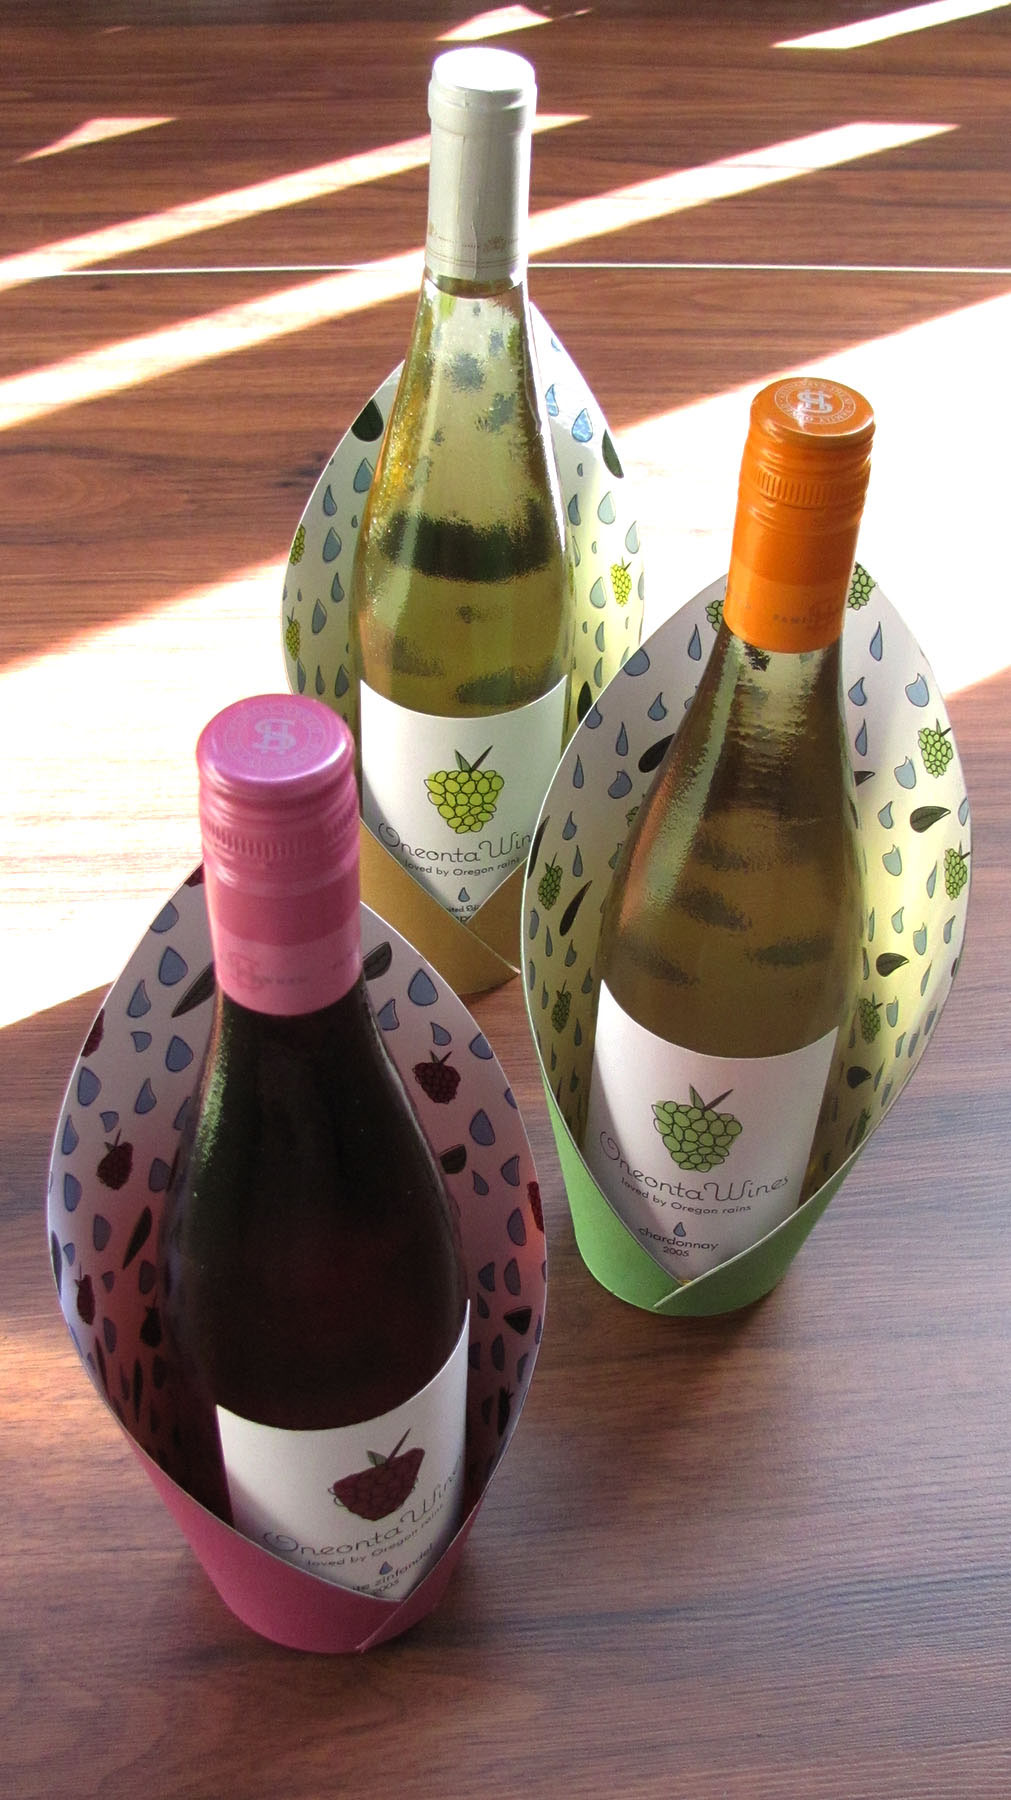 Adobe Portfolio oneonta Oregon wine grapes labels package wraps